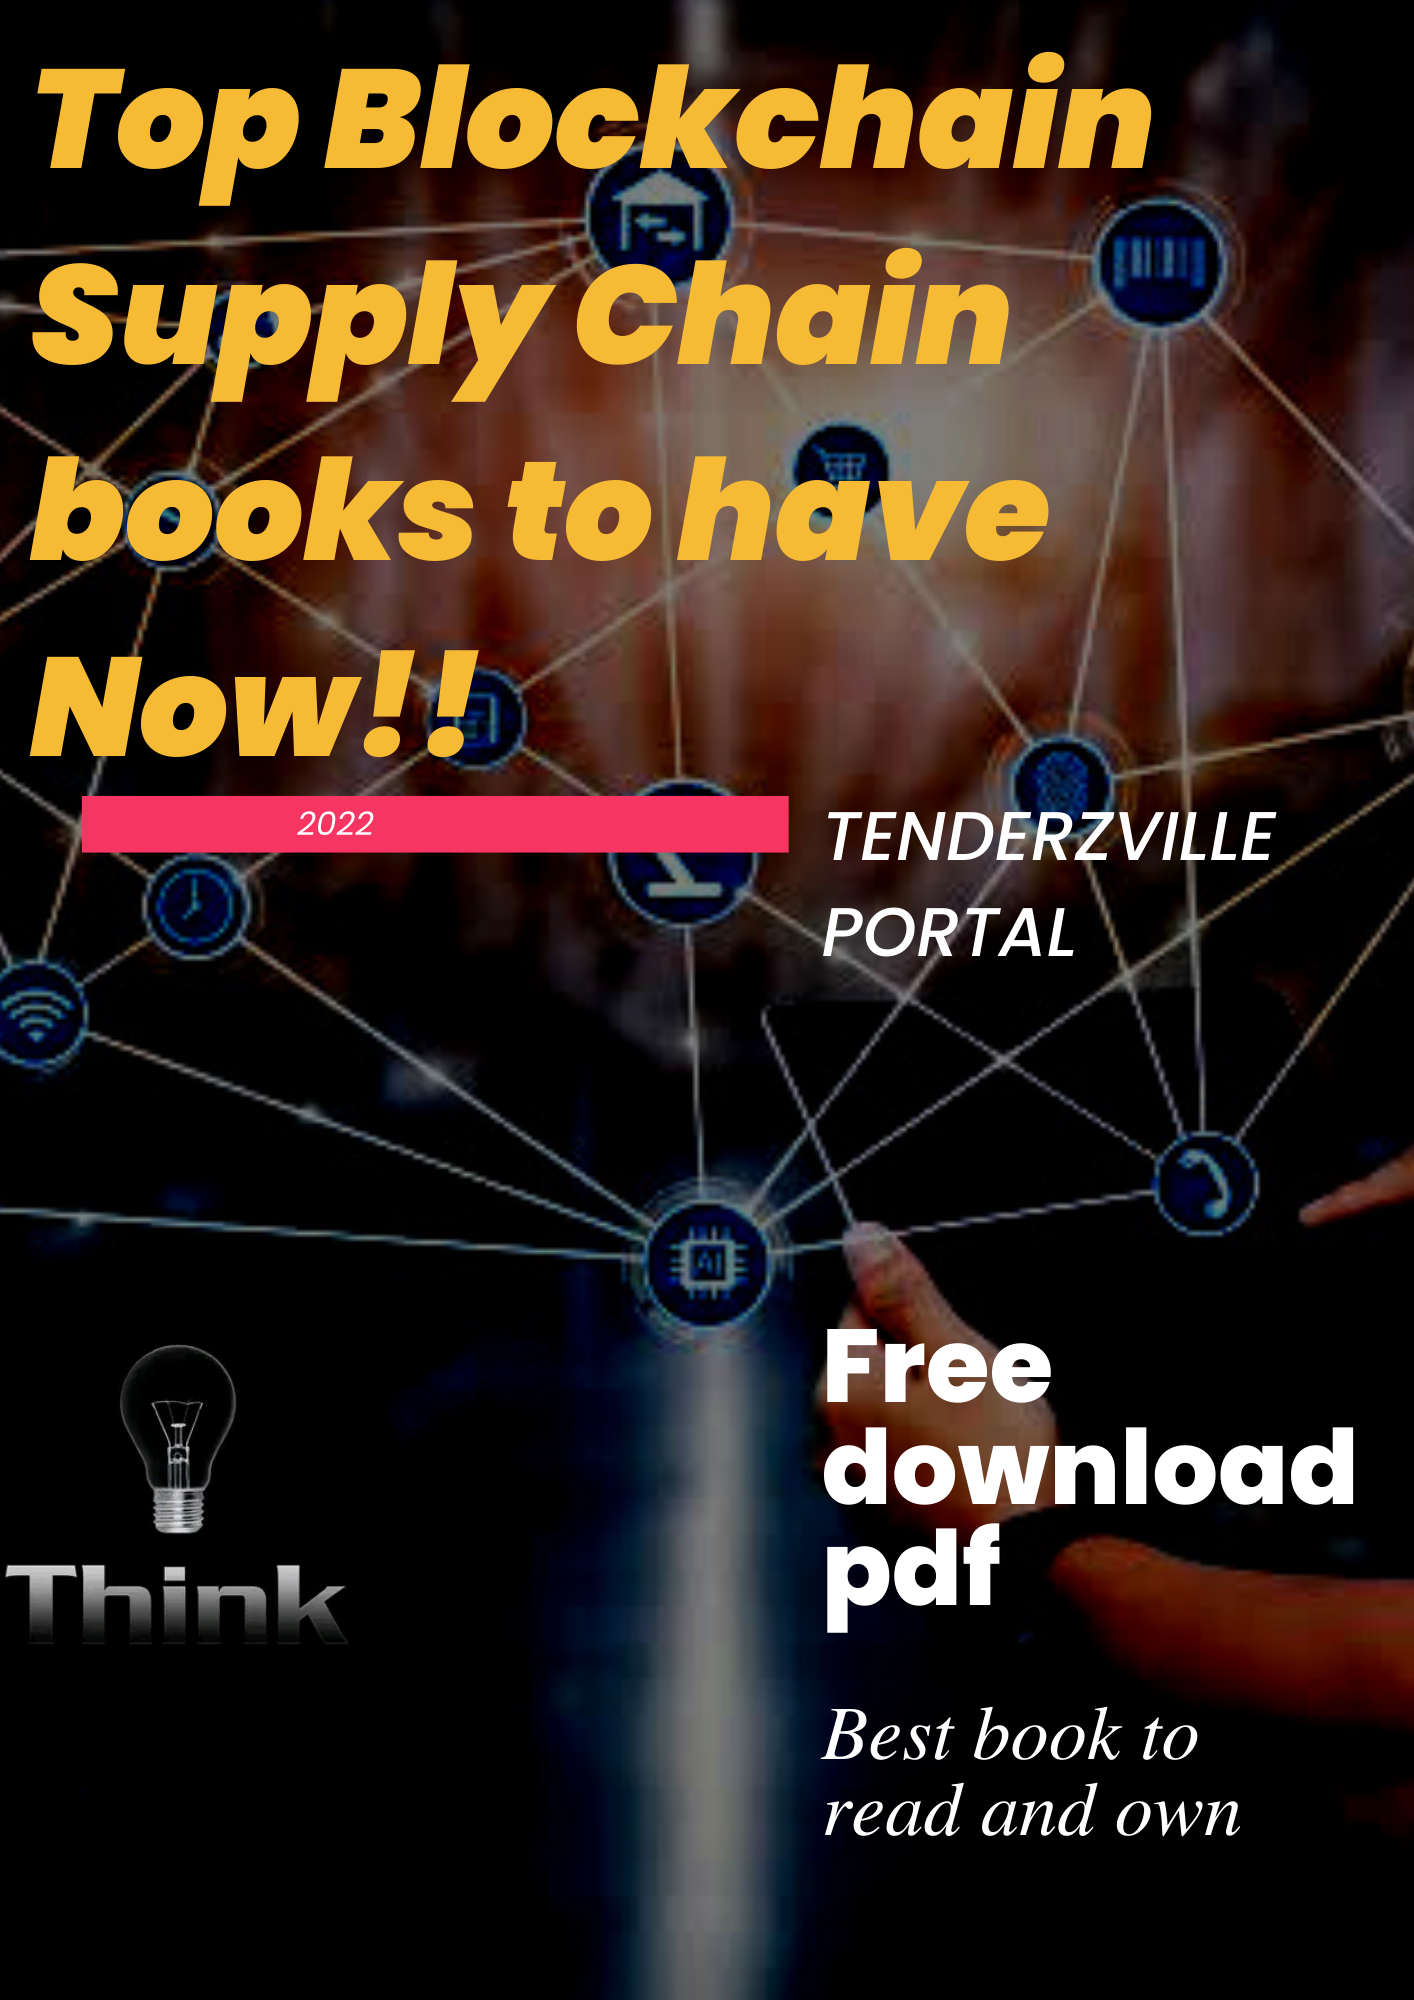 Top blockchain supply chain books